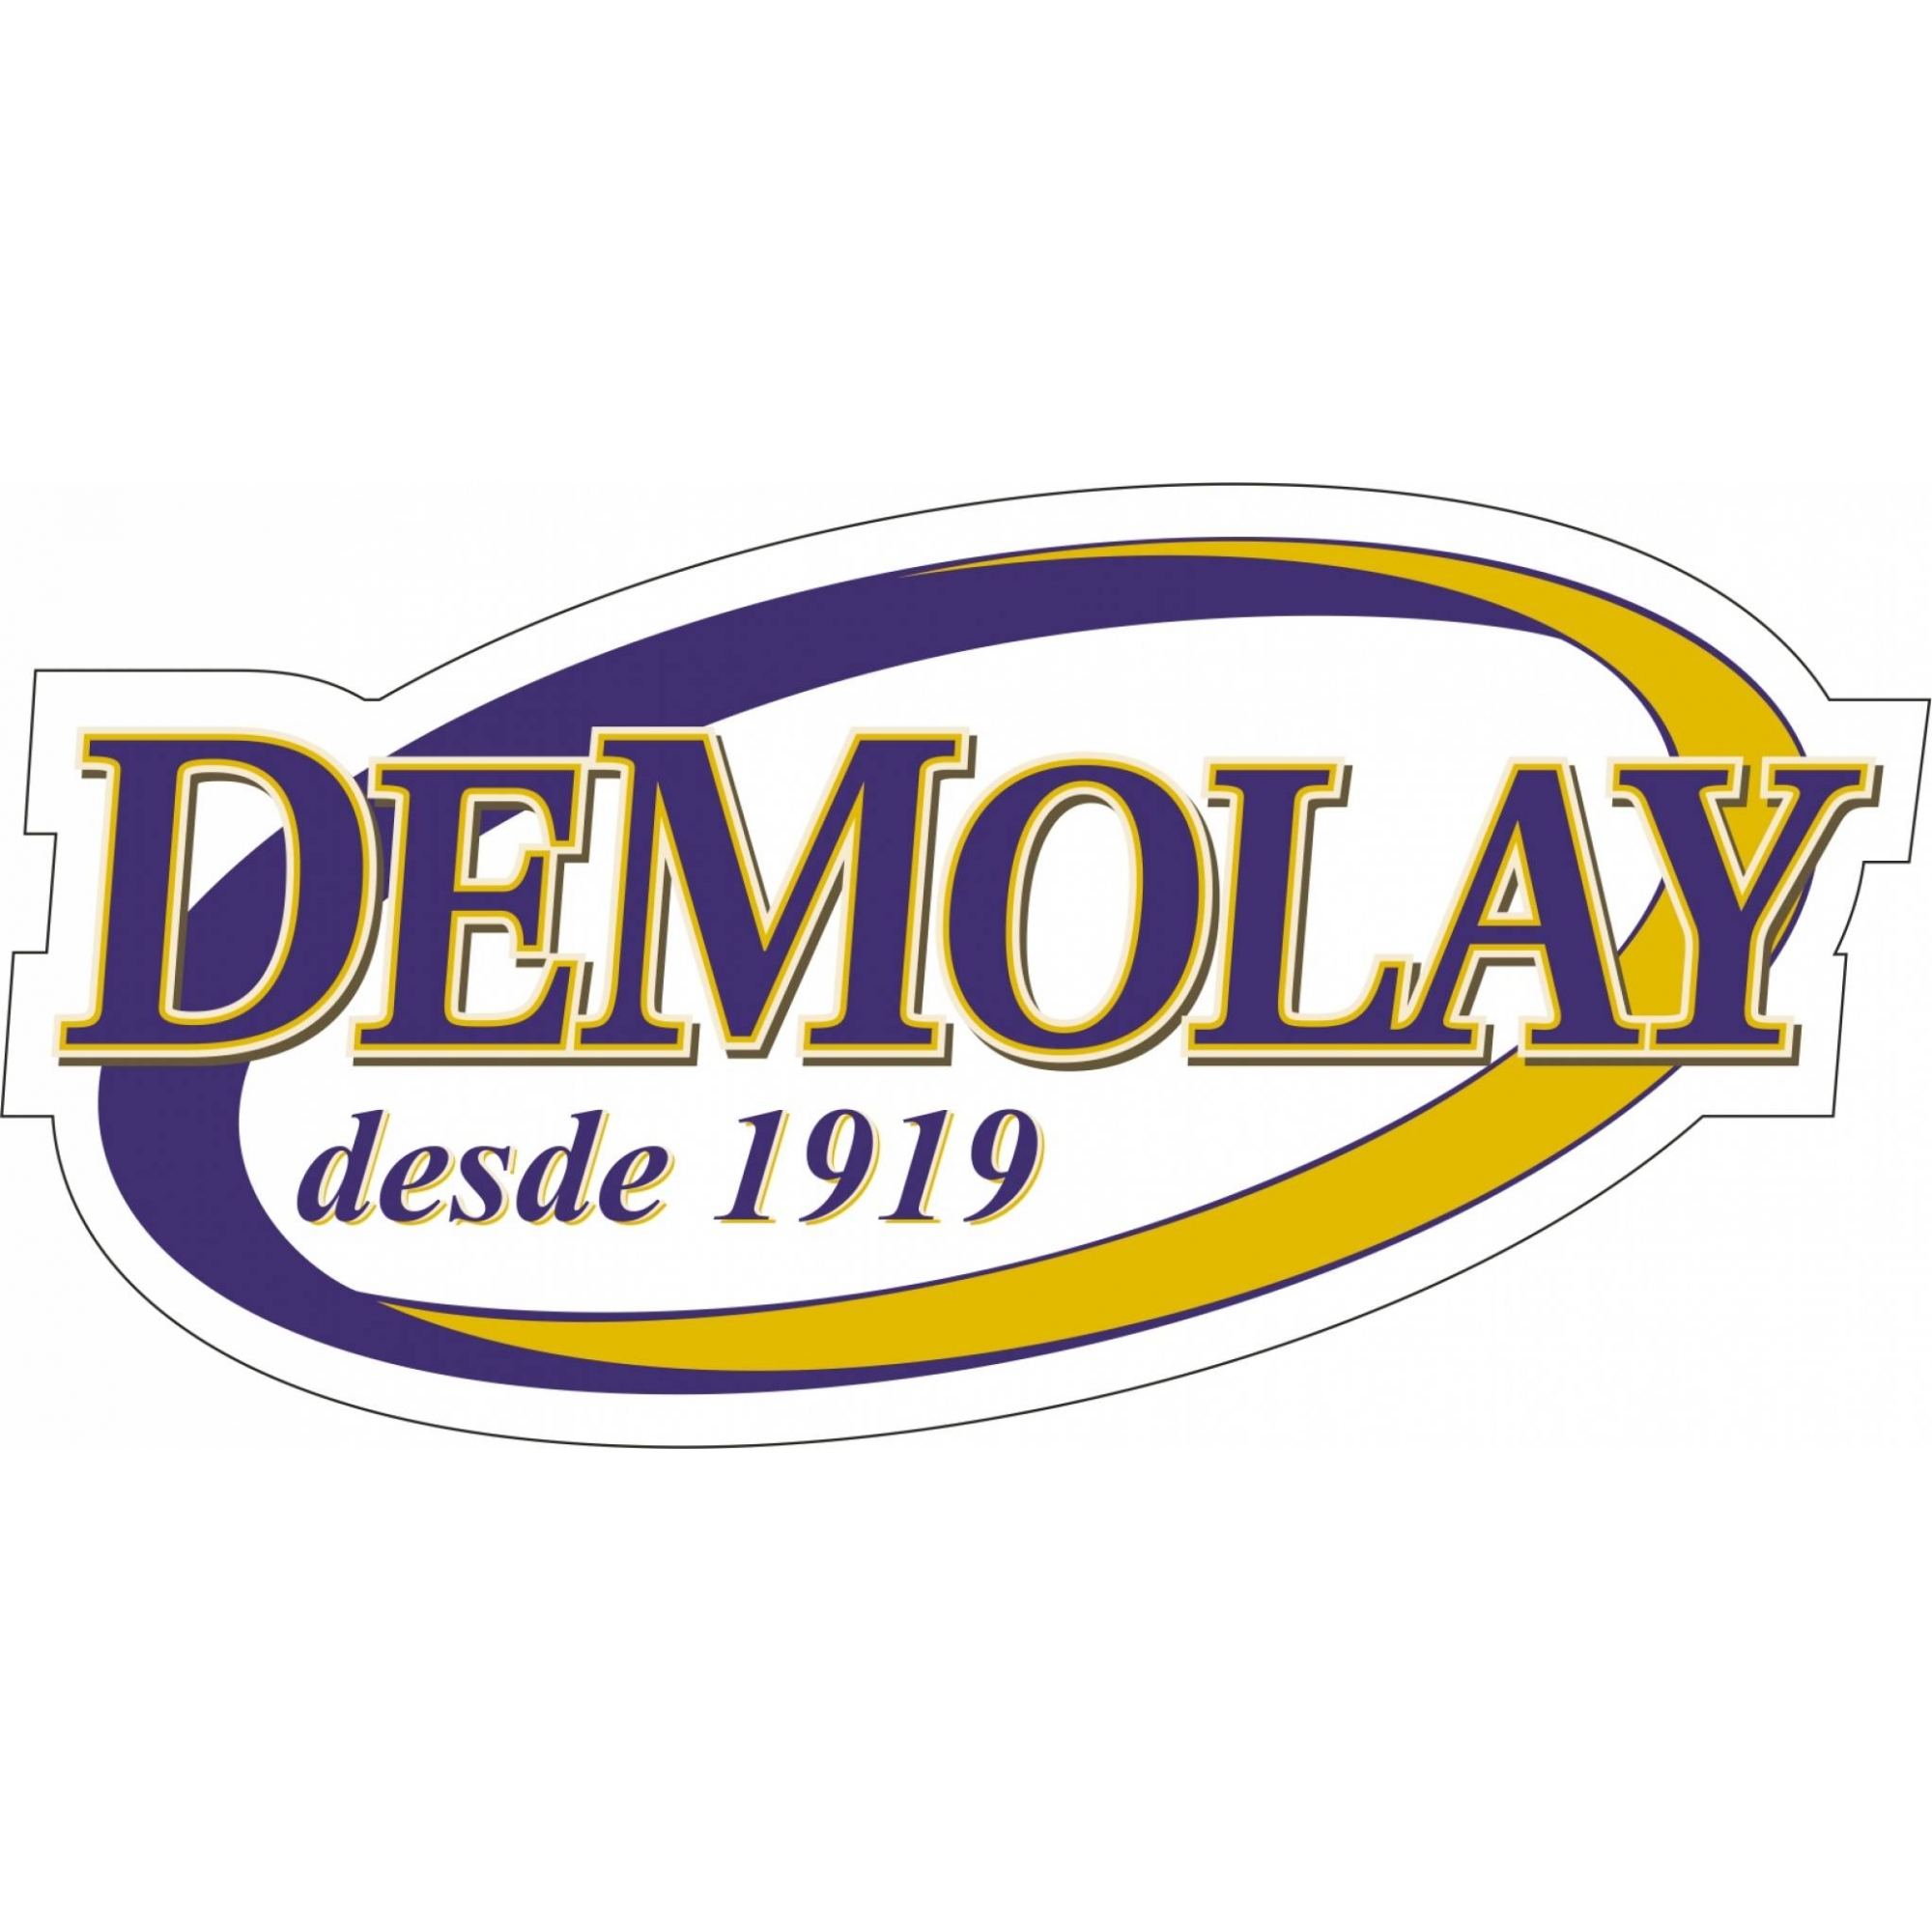 Adesivo DeMolay desde 1919 - Externo